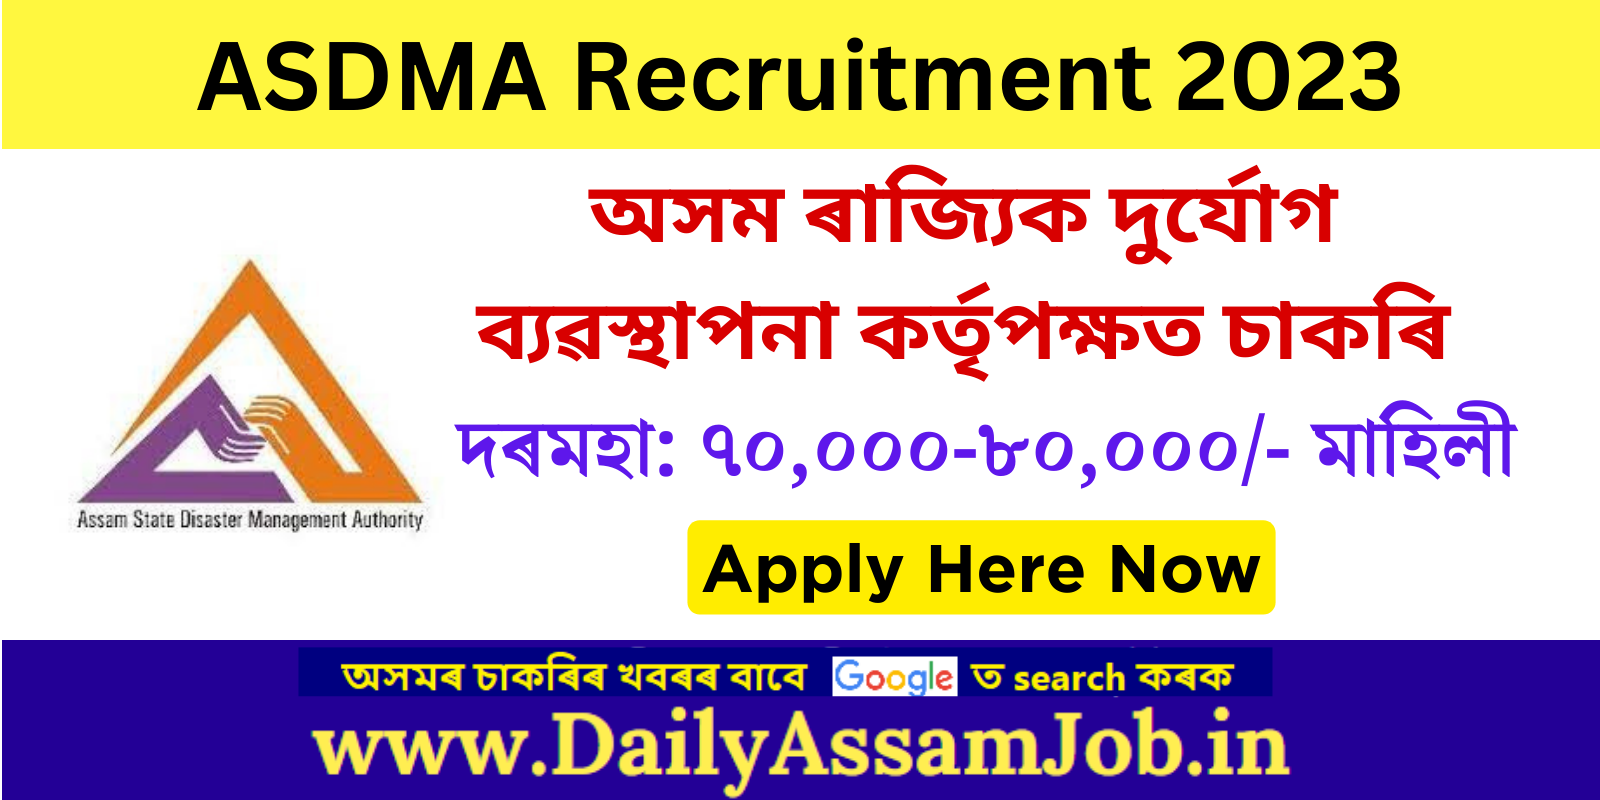 Assam Career :: ASDMA Recruitment 2023 for Specialist & DMV Vacancy